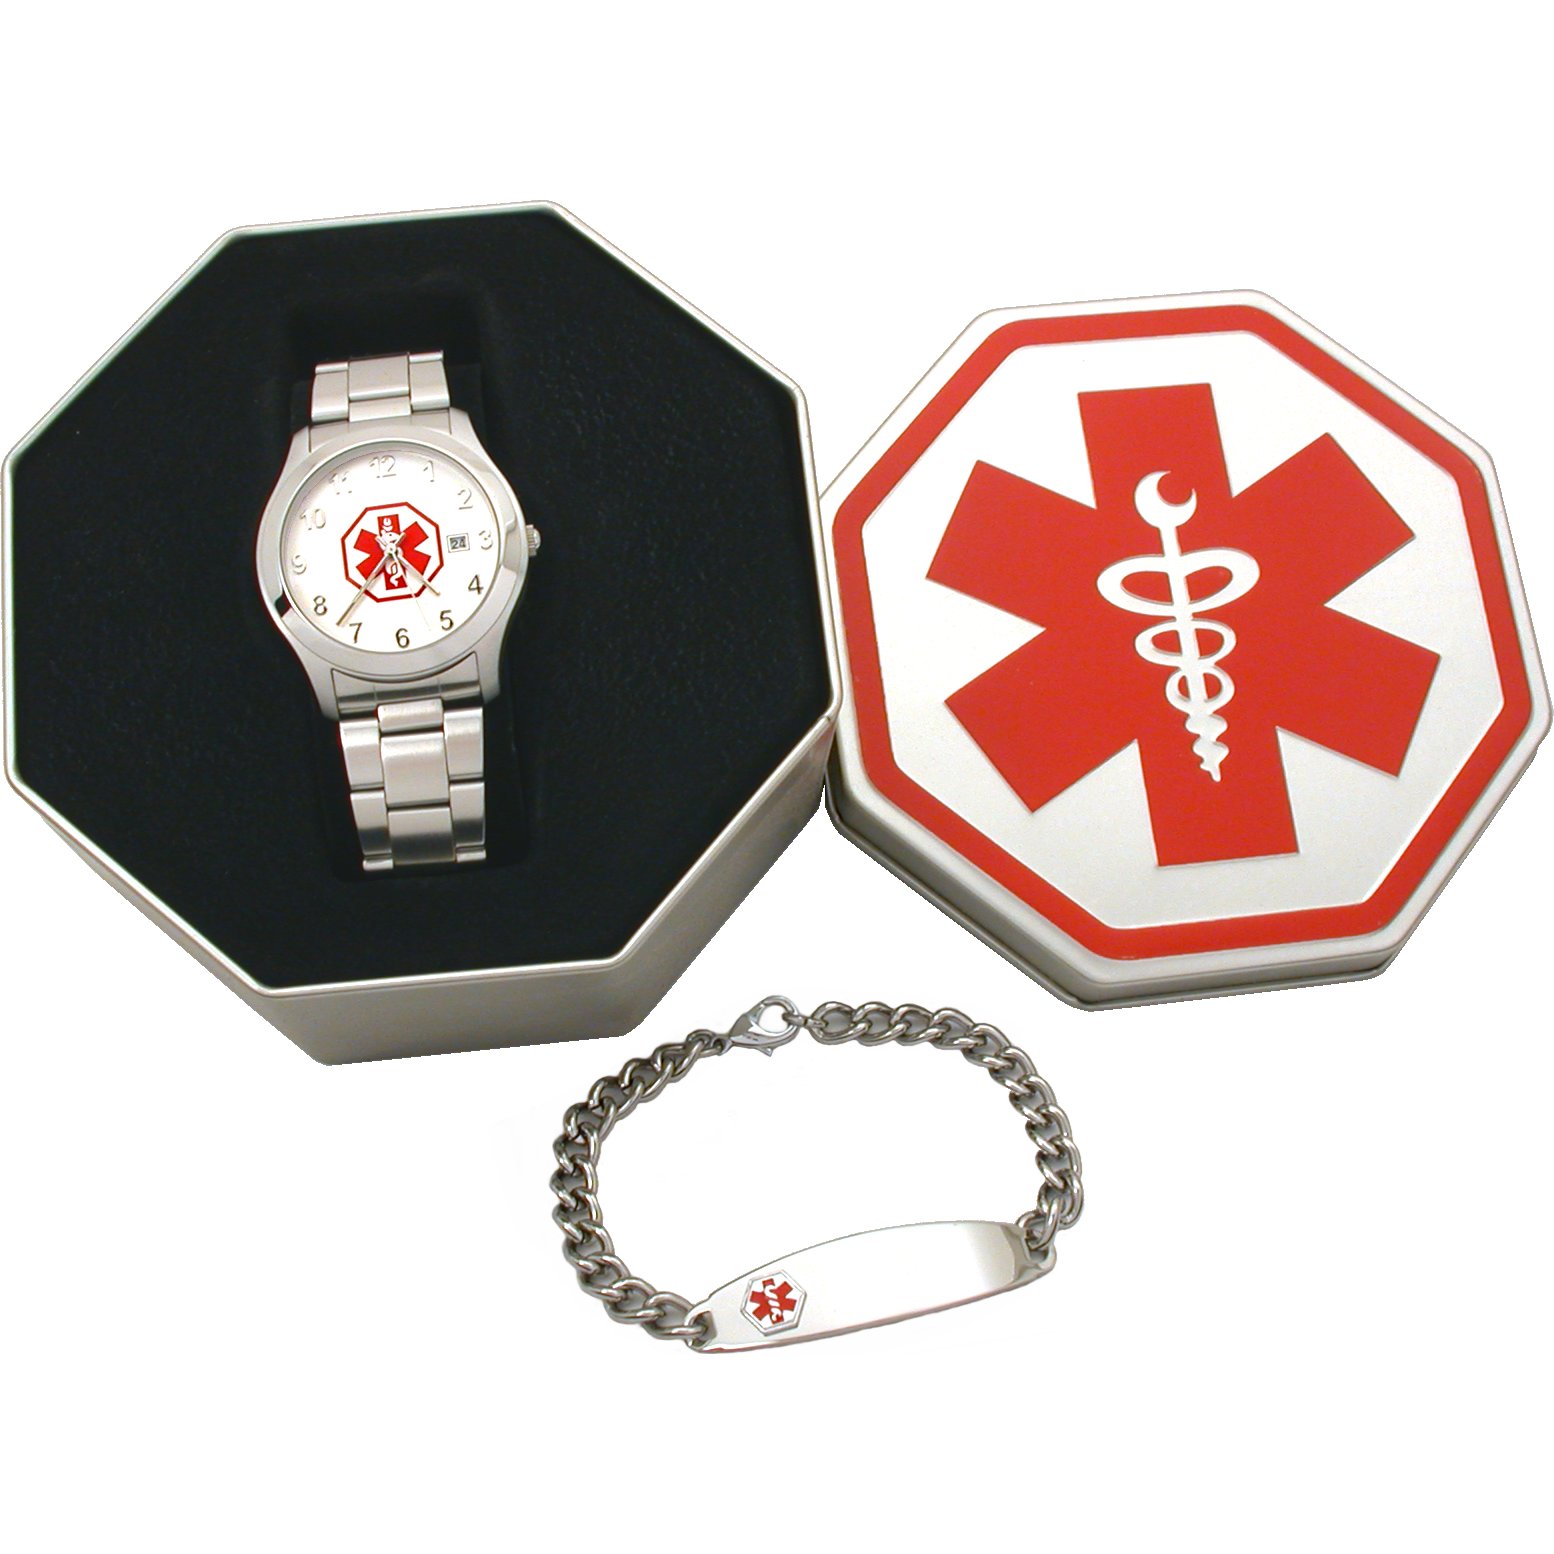 Findingking Medical ID Watch & Bracelet for Emergency Information